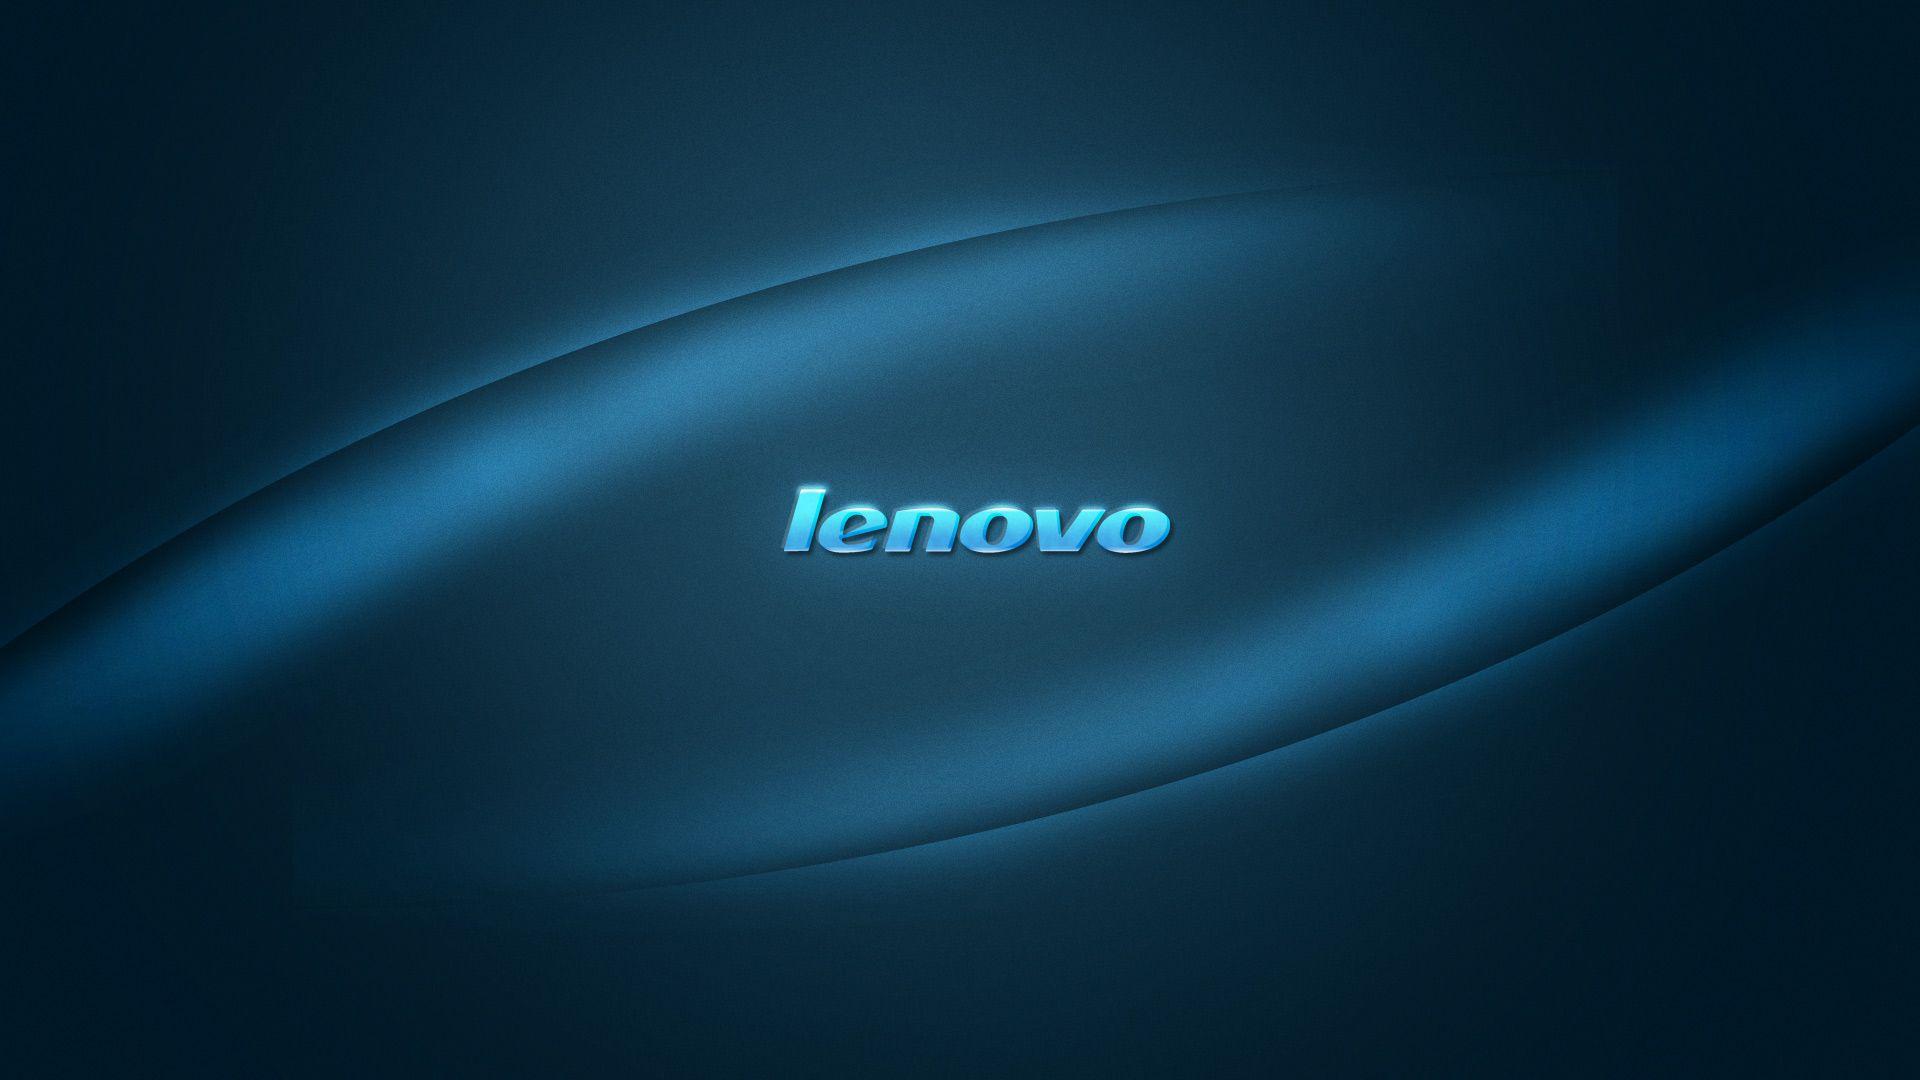 Lenovo 4K Wallpapers - Top Free Lenovo 4K Backgrounds ...